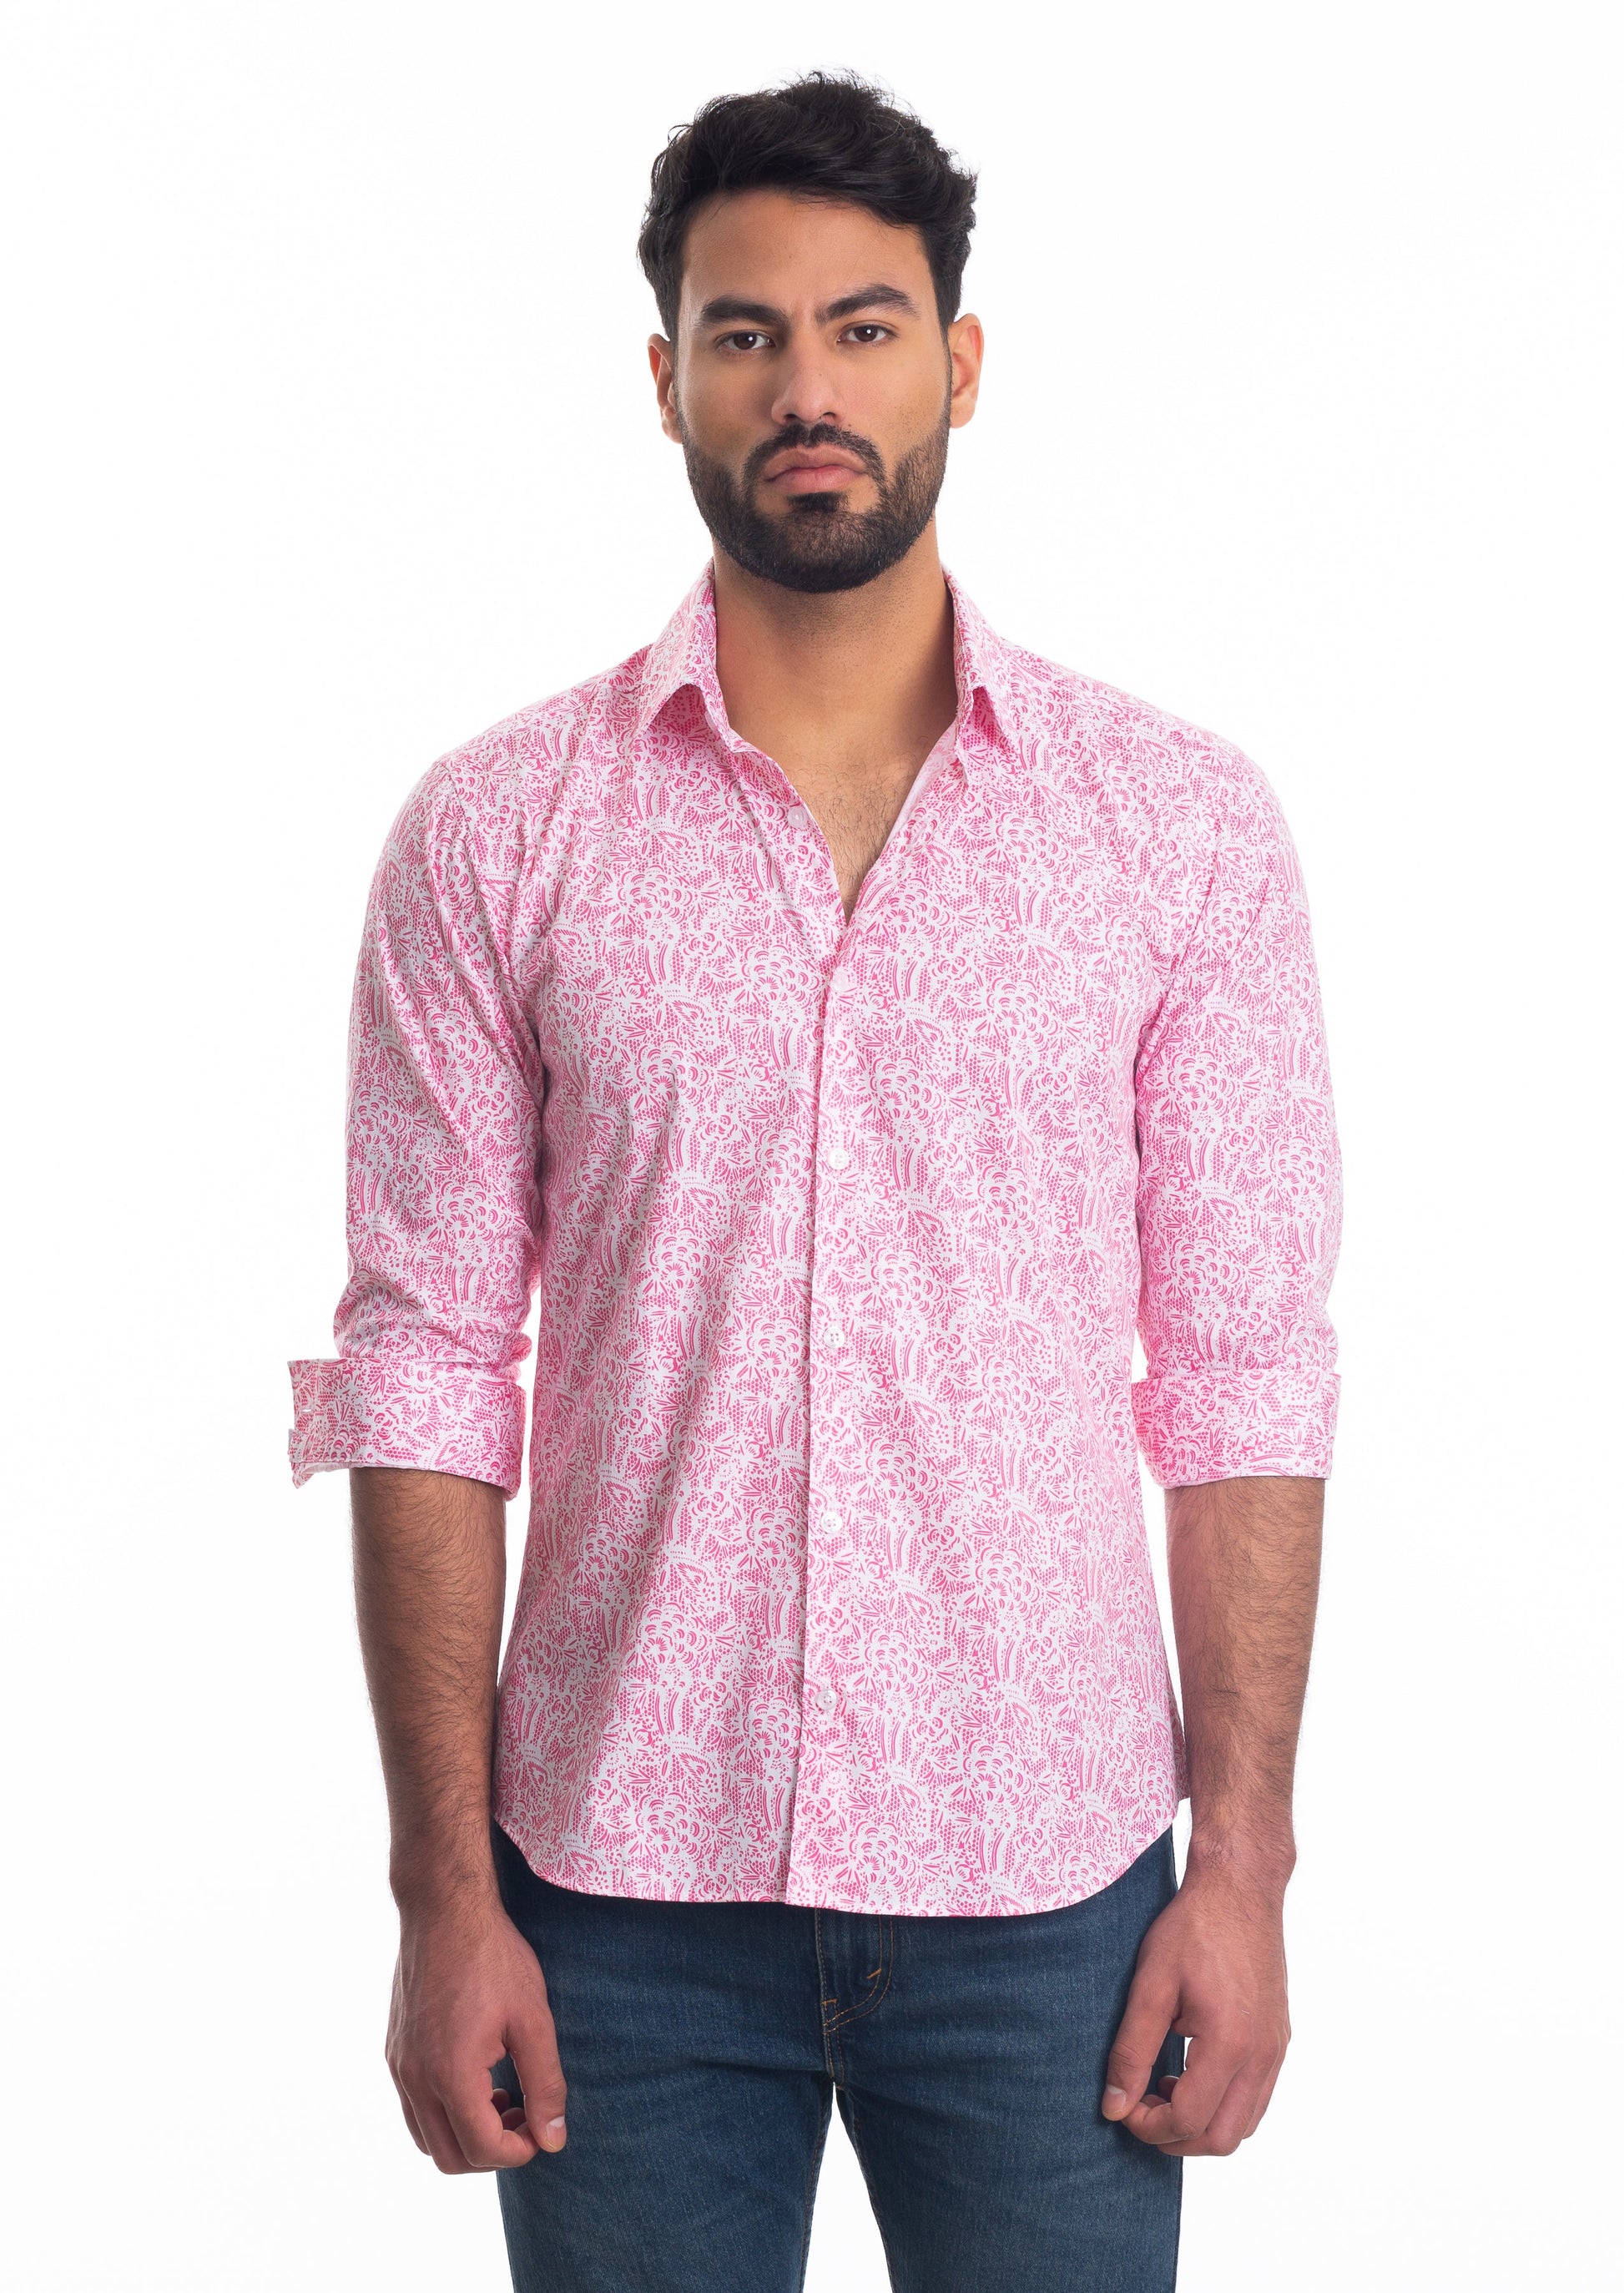 Pink Paisley Long Sleeve Shirt T-6816 Front